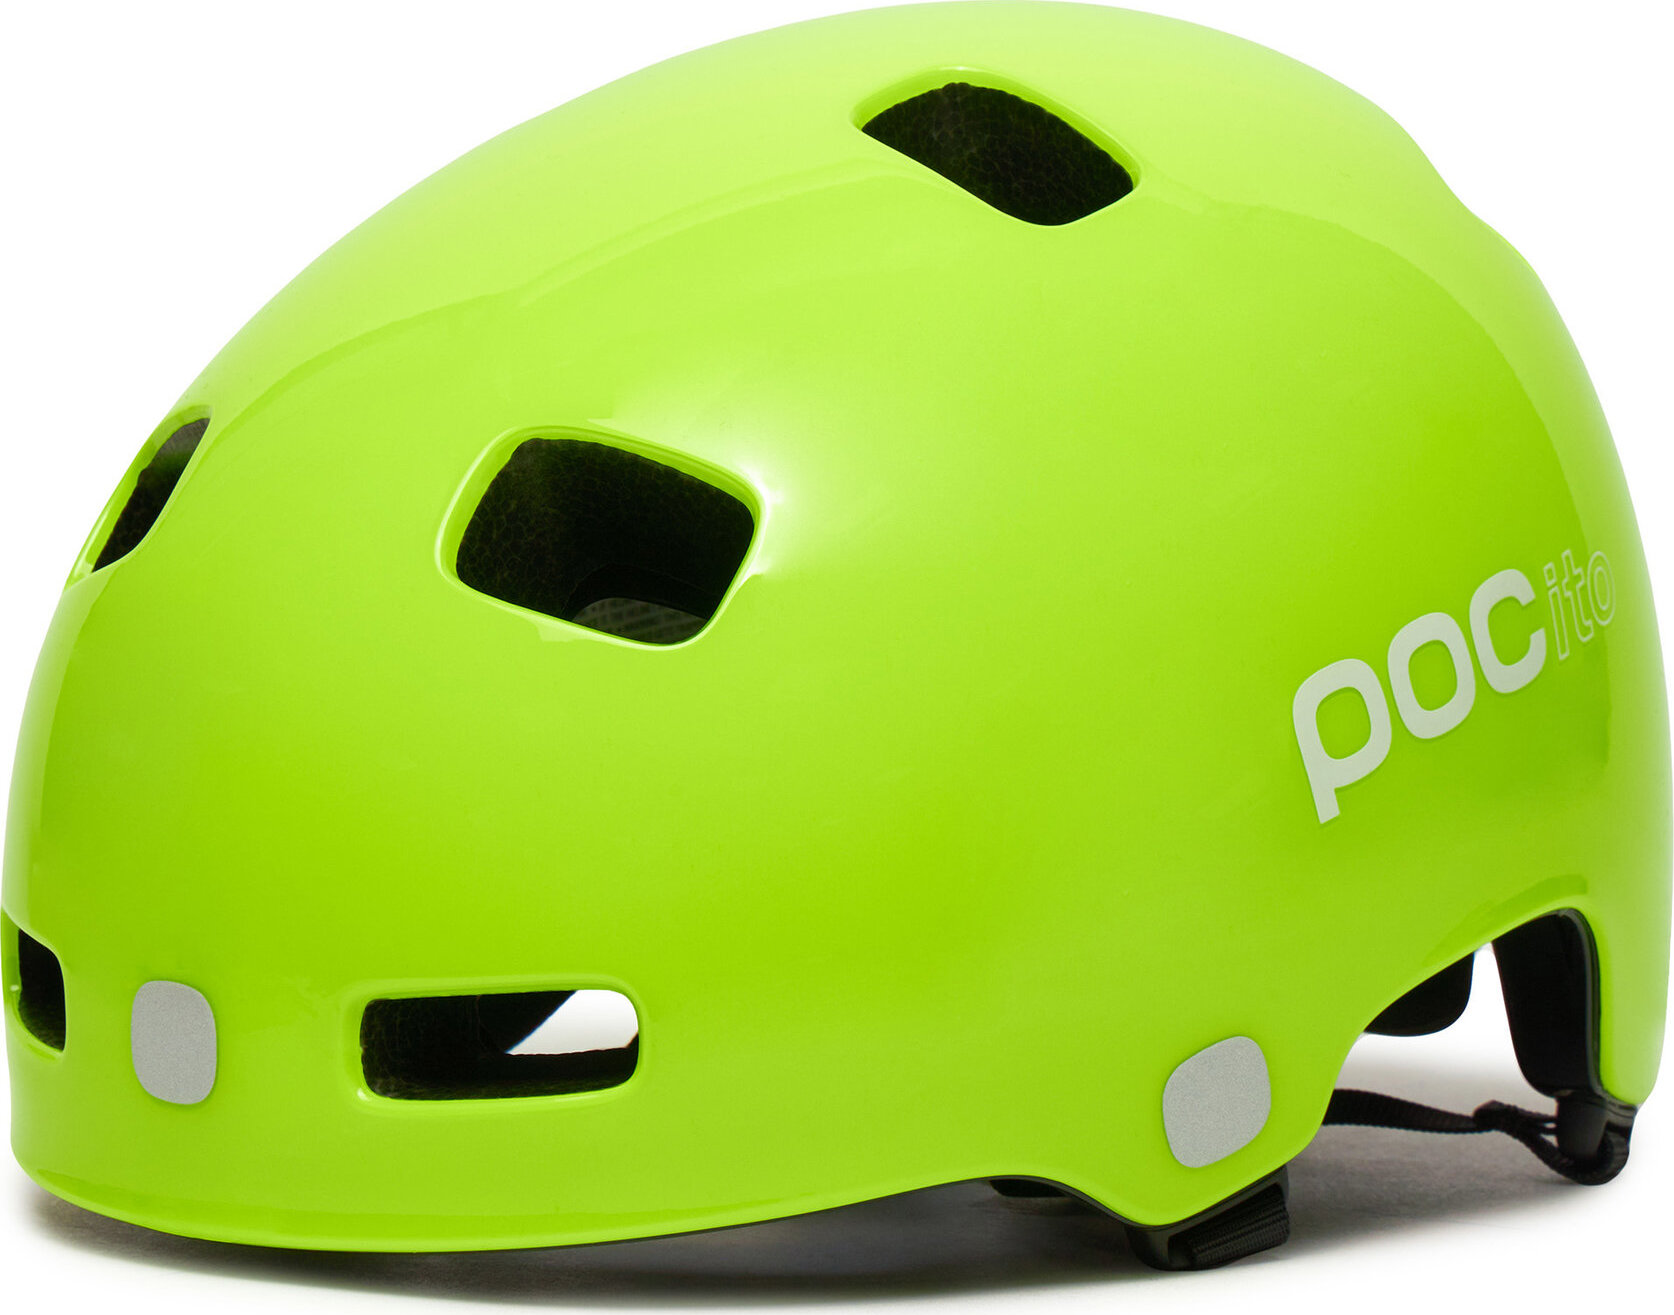 Cyklistická helma POC Pocito Crane Mips 10826 8234 Fluorescent Yellow/Green